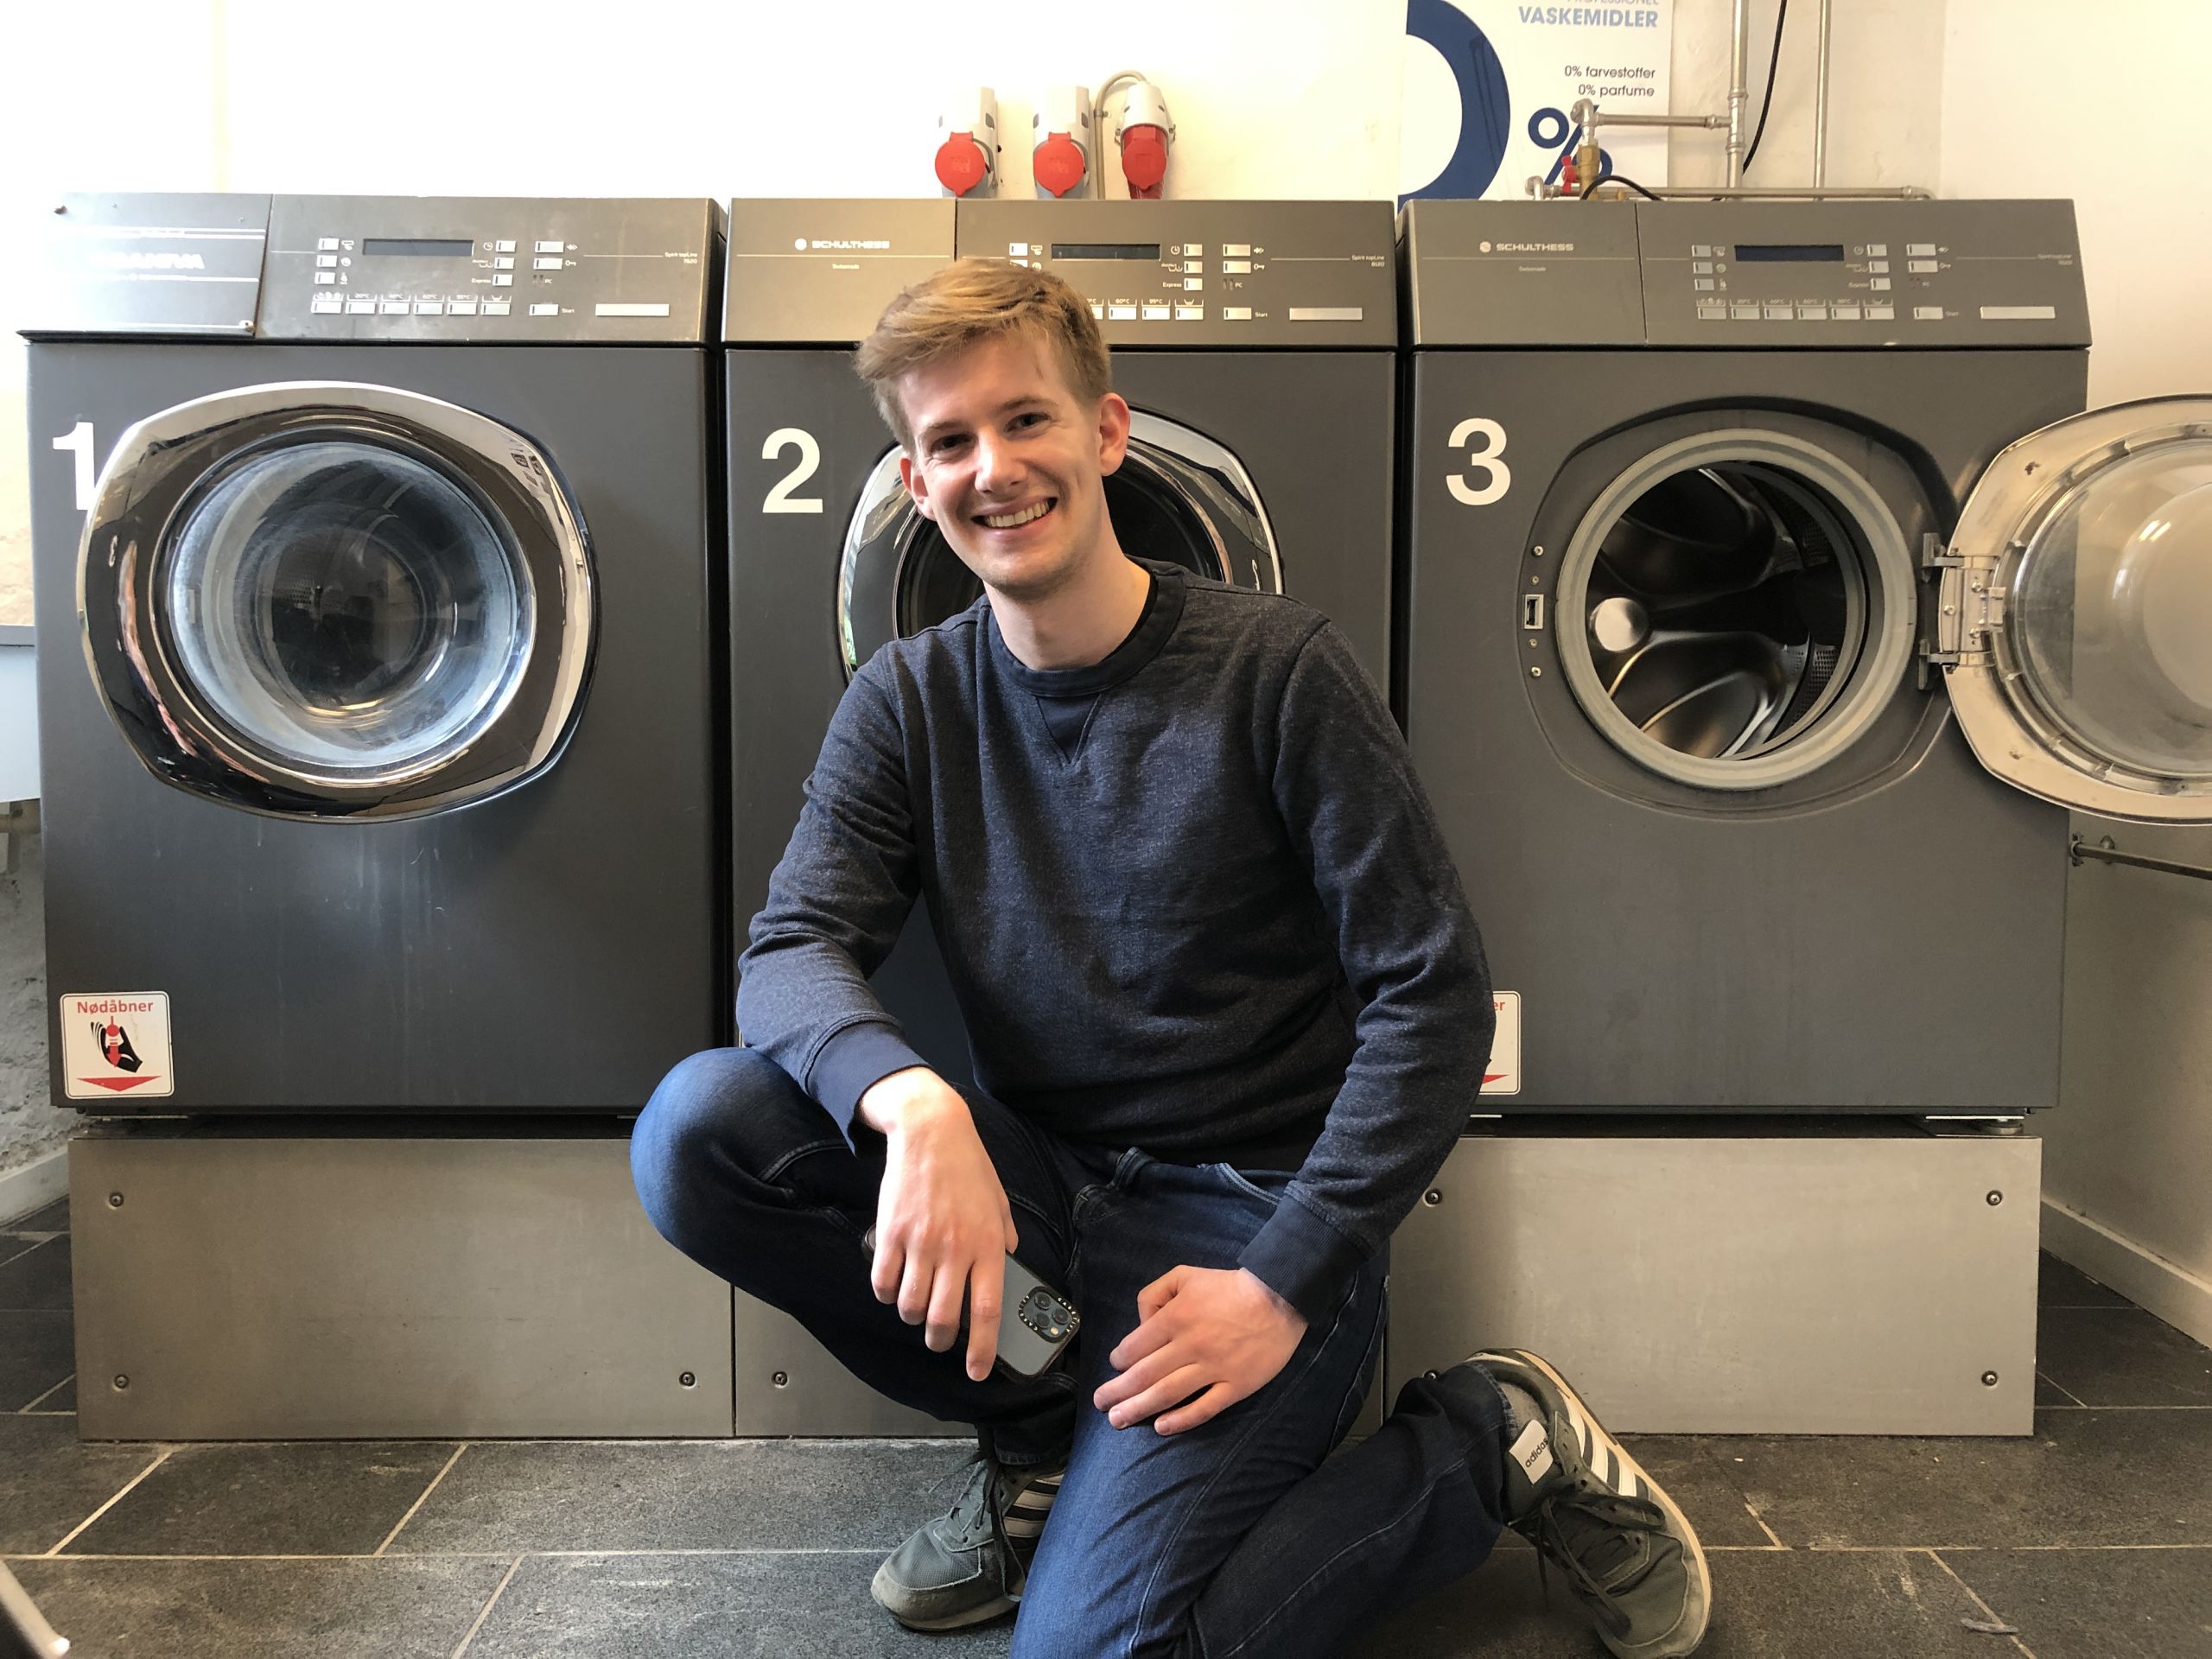 Man sitting in front of washing machines